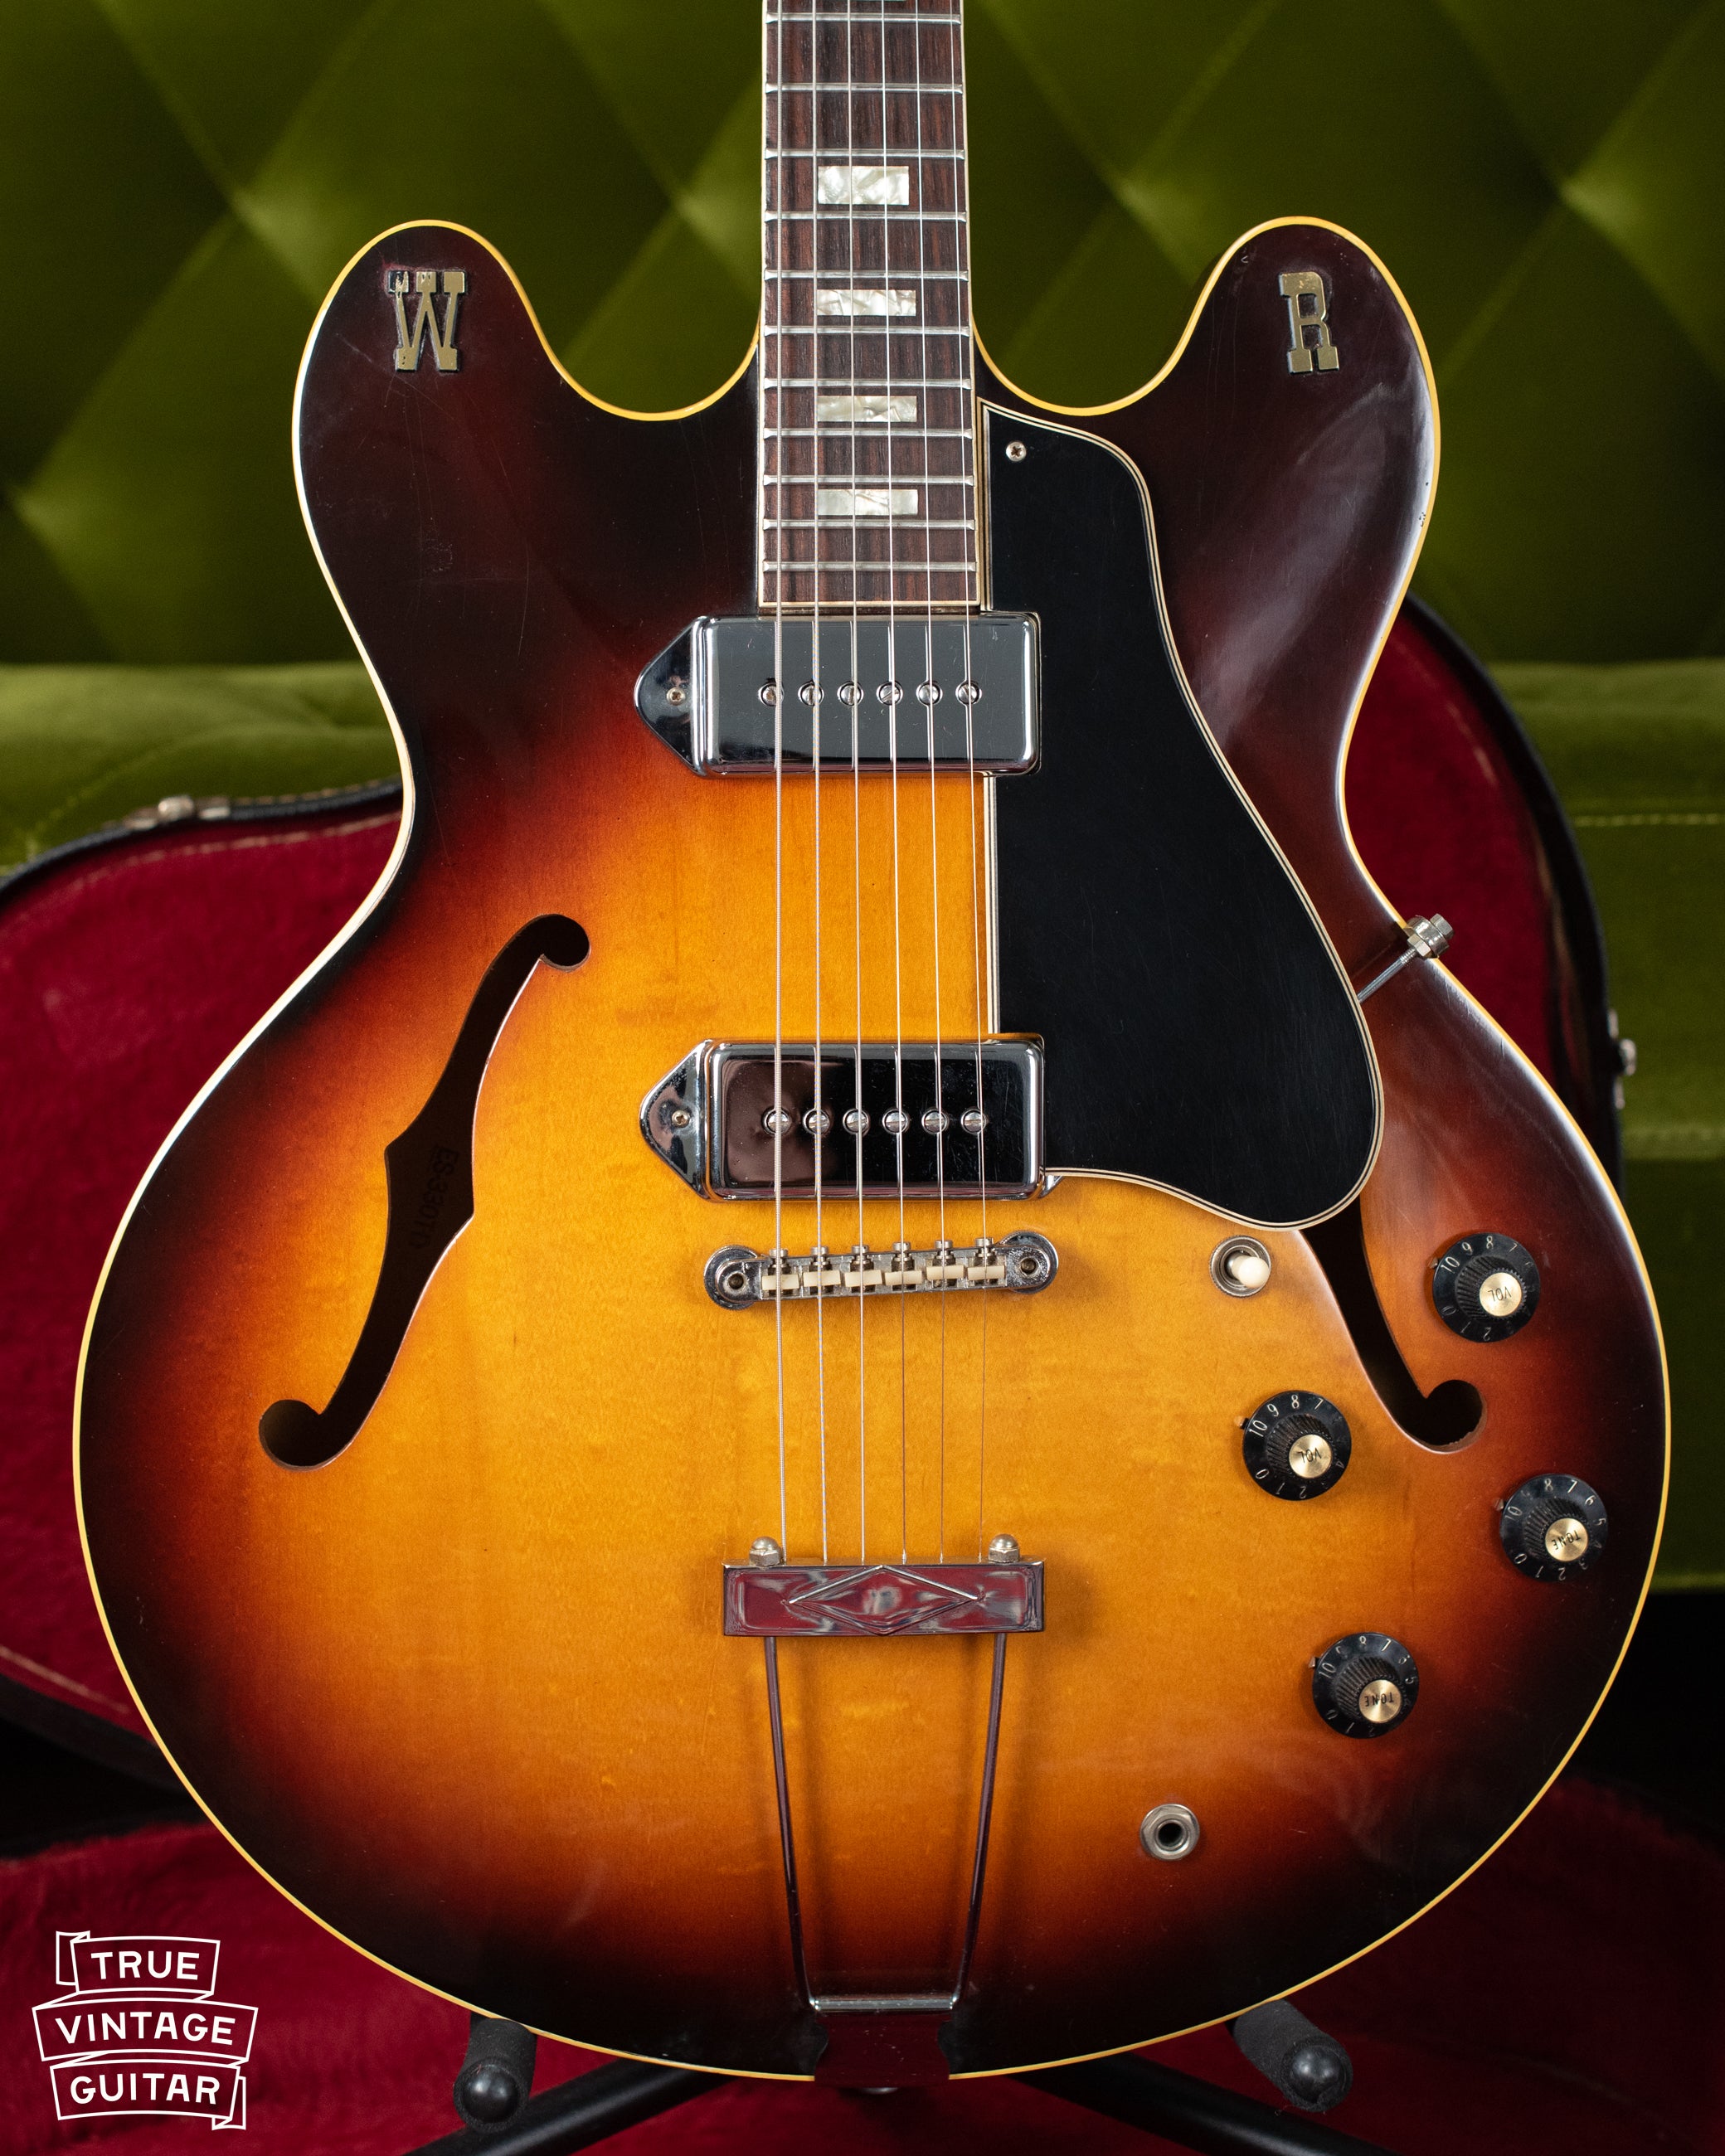 Vintage Gibson ES-330 guitar